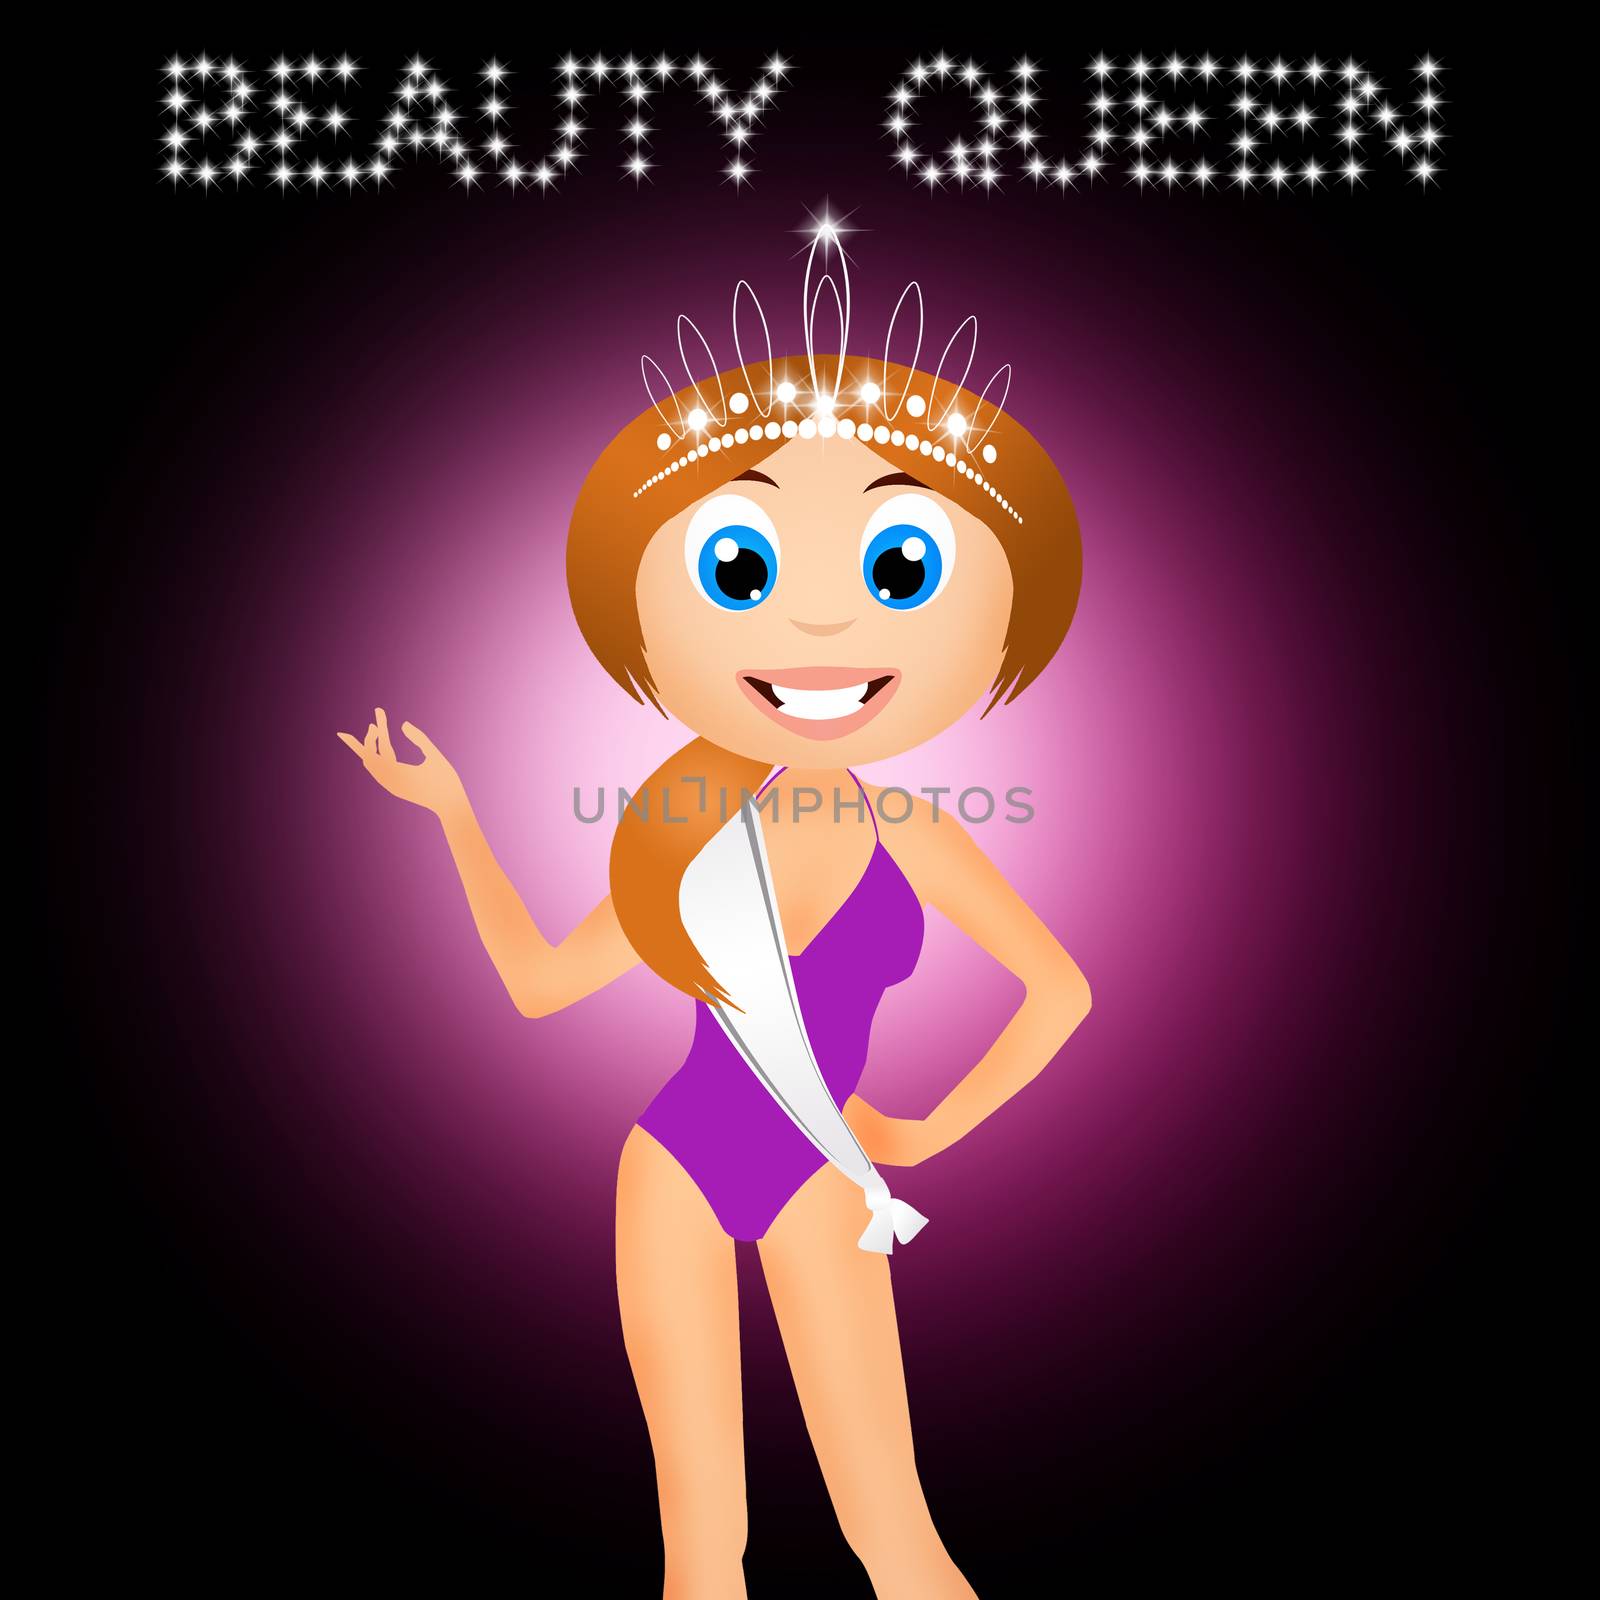 Beauty queen by adrenalina